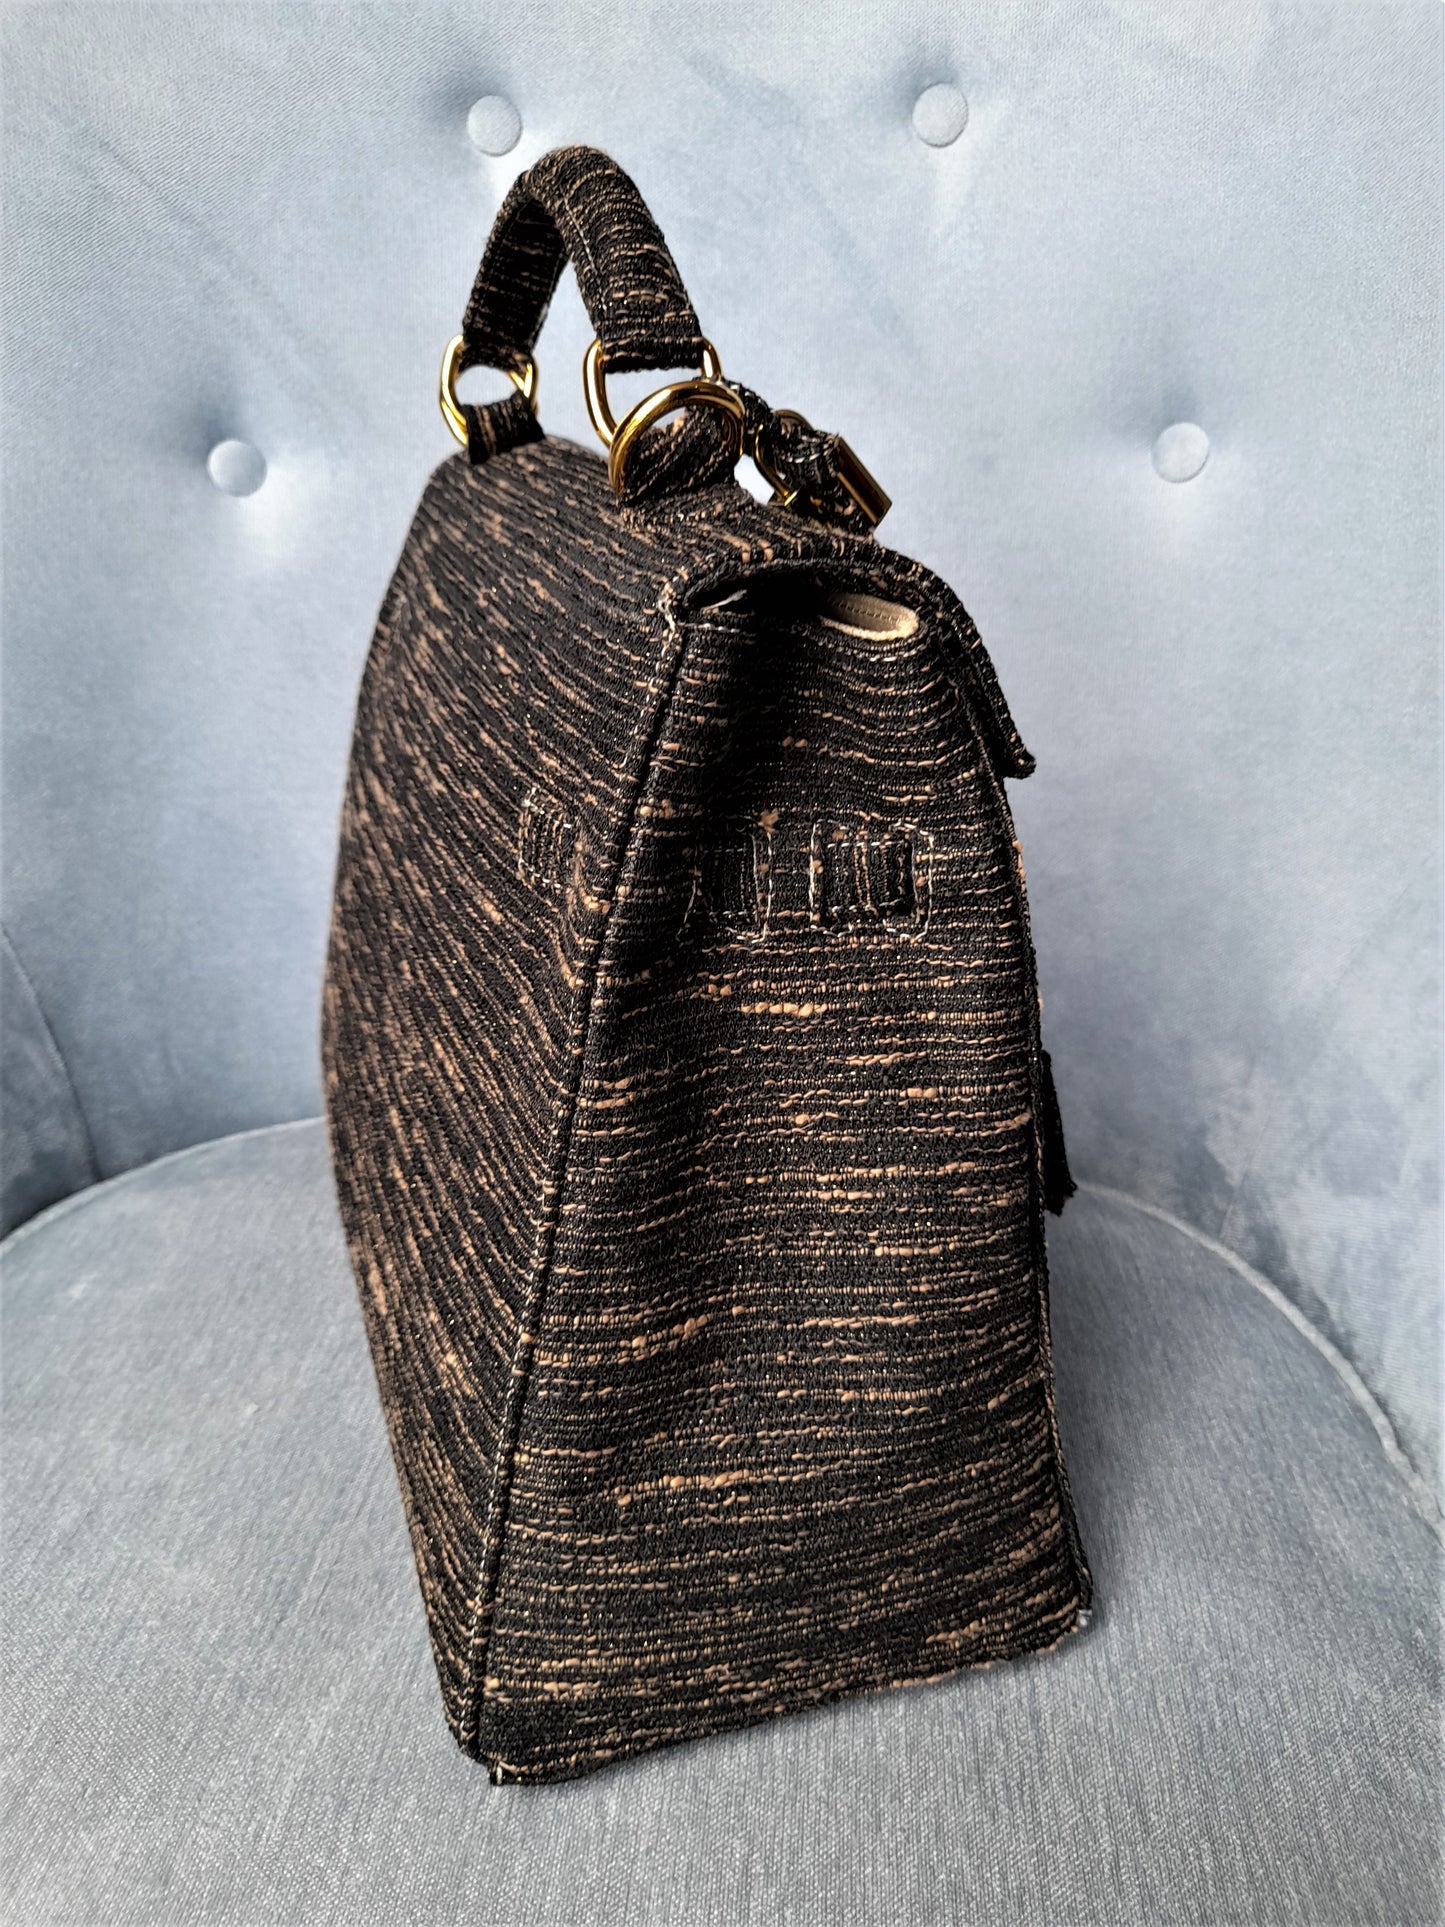 Handmade Tweed bag, Medium size (35cm)_style 24